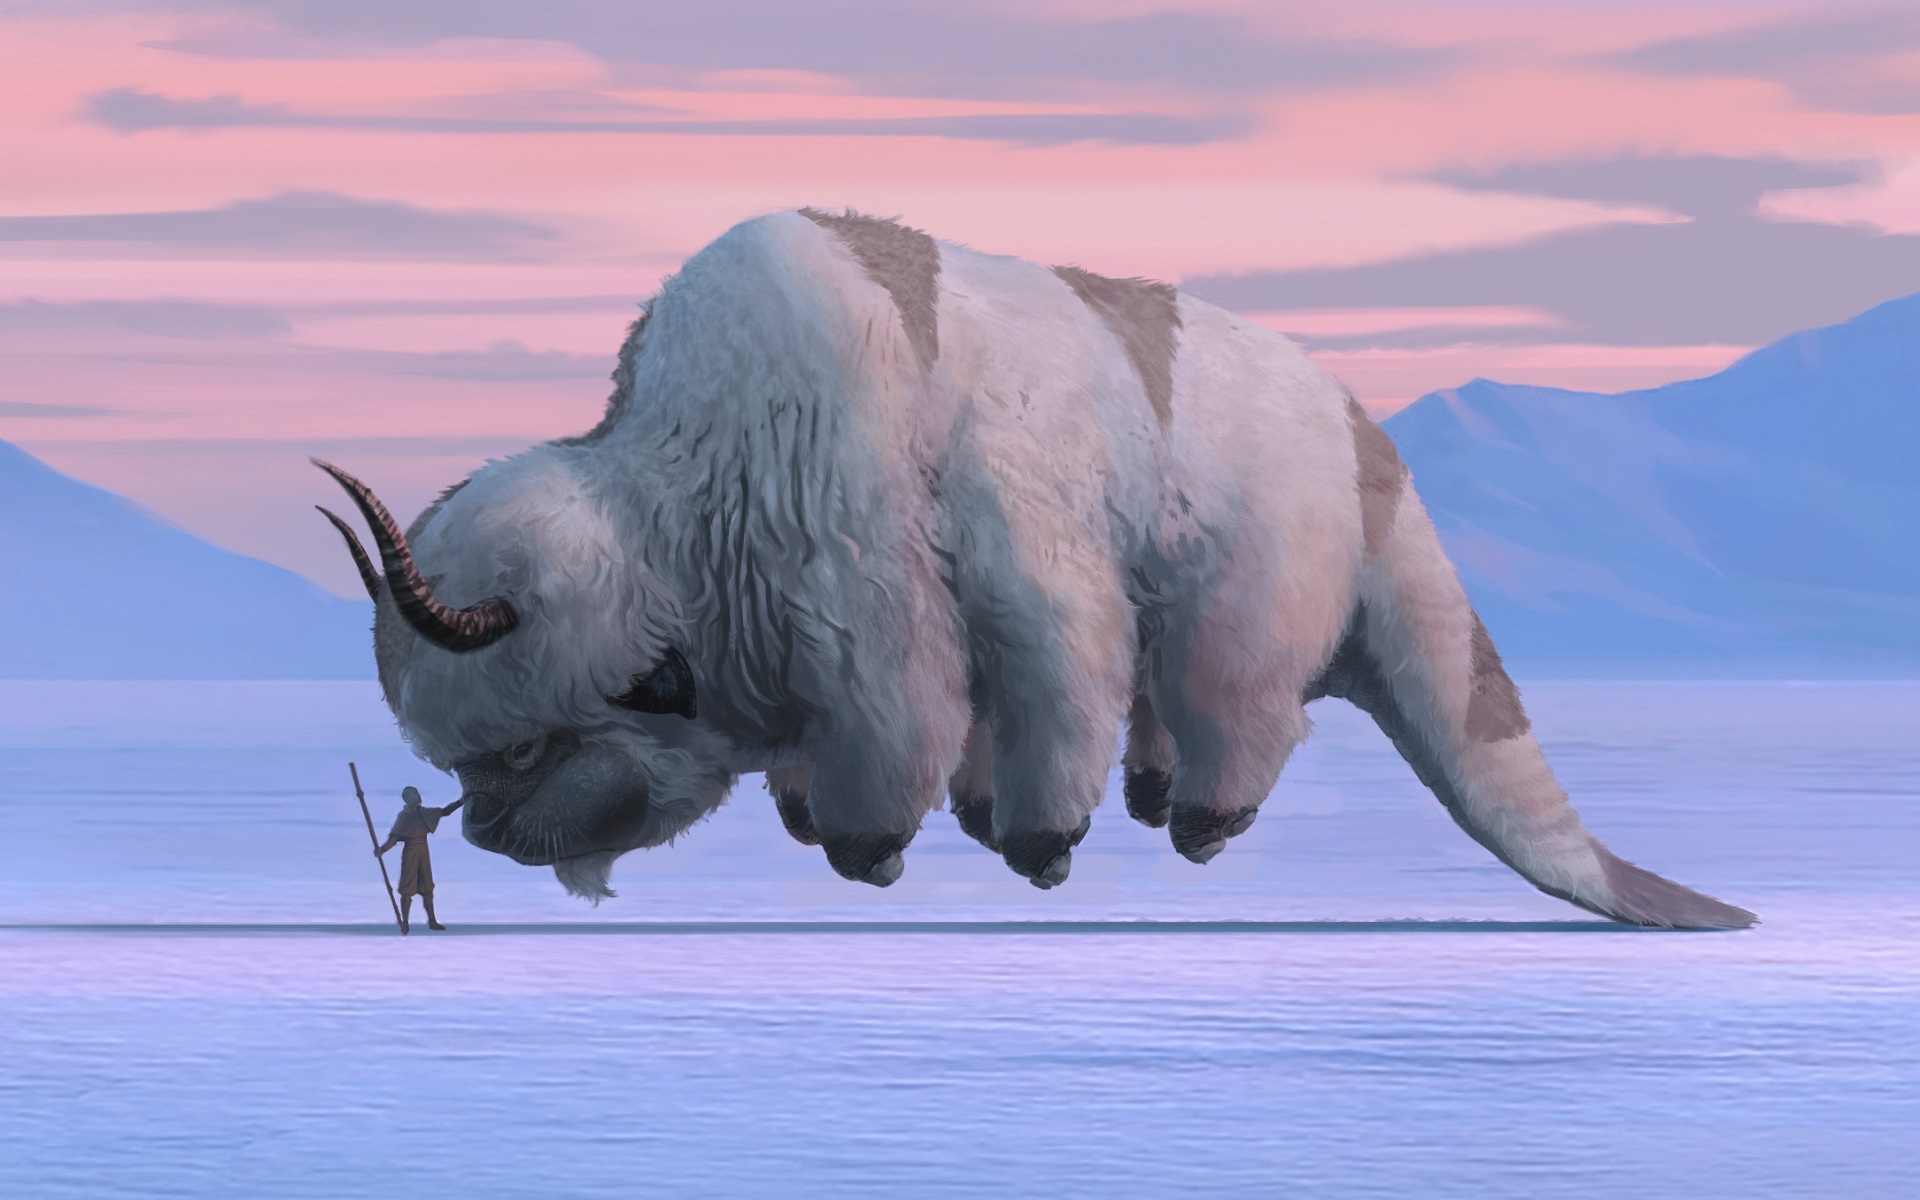 Artwork Fantasy Art Avatar Avatar The Last Airbender Aang Appa Bison Snow Winter Animals Fictional C 1920x1200